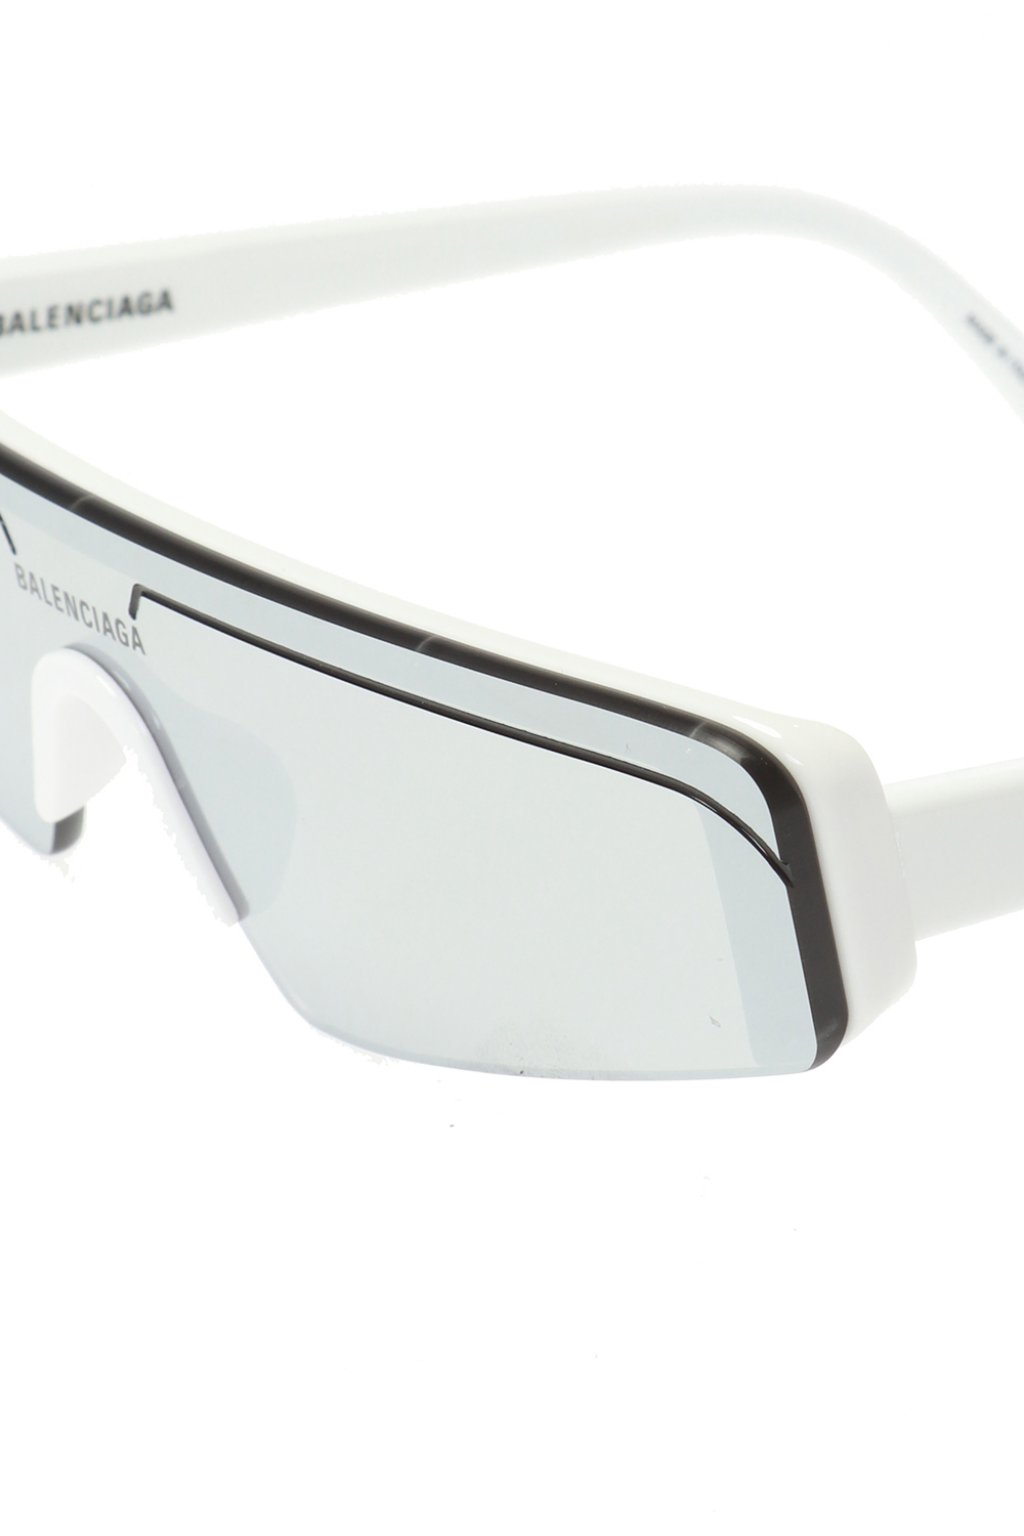 Balenciaga Branded sunglasses